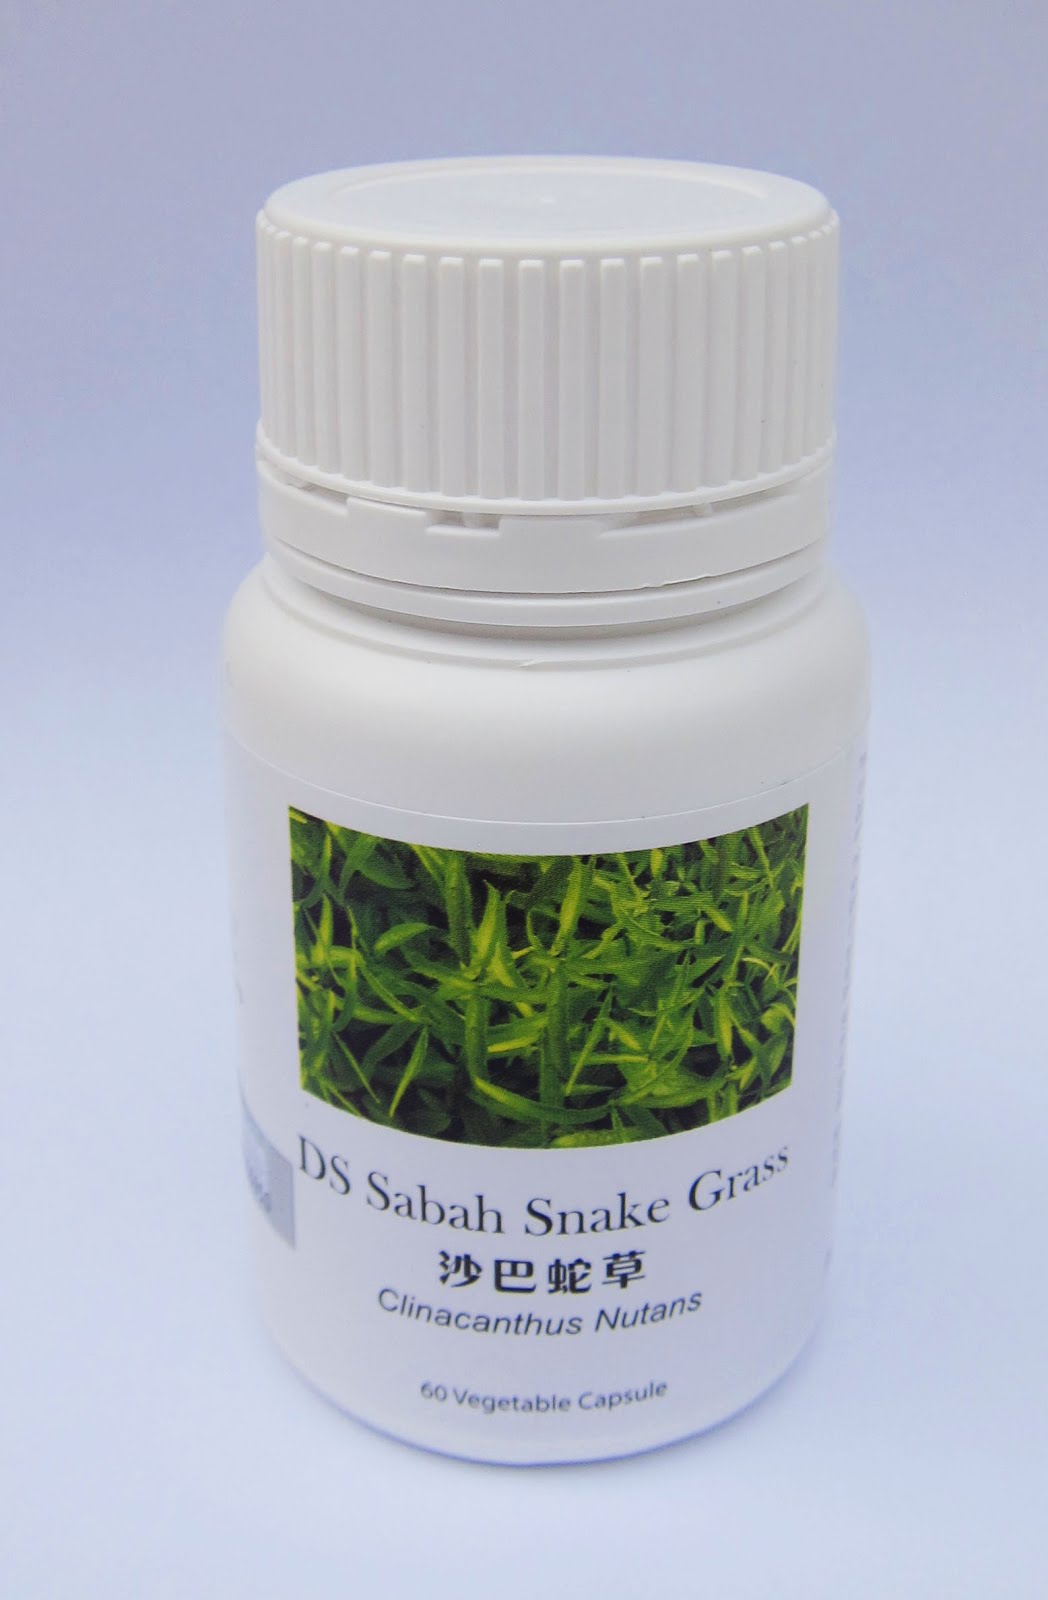 DS Sabah Snake Grass